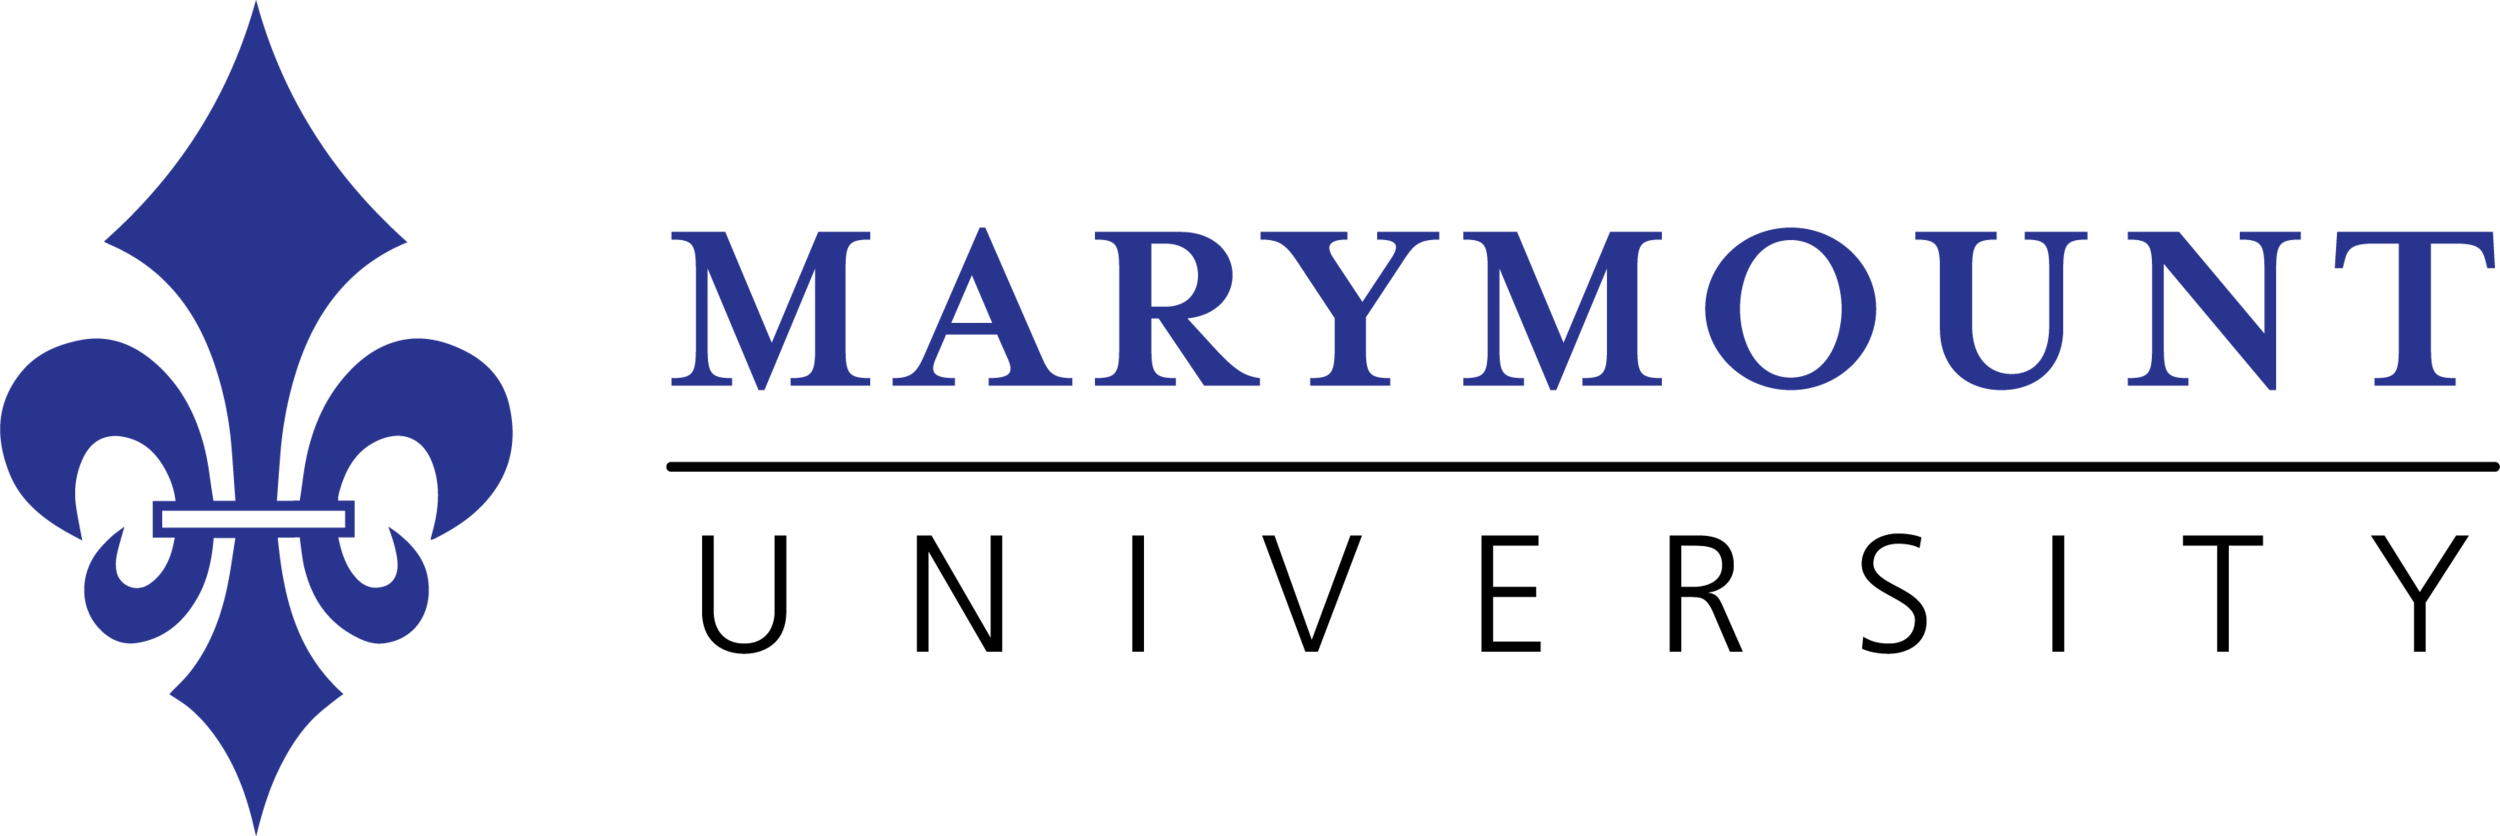 Université Marymount. logo